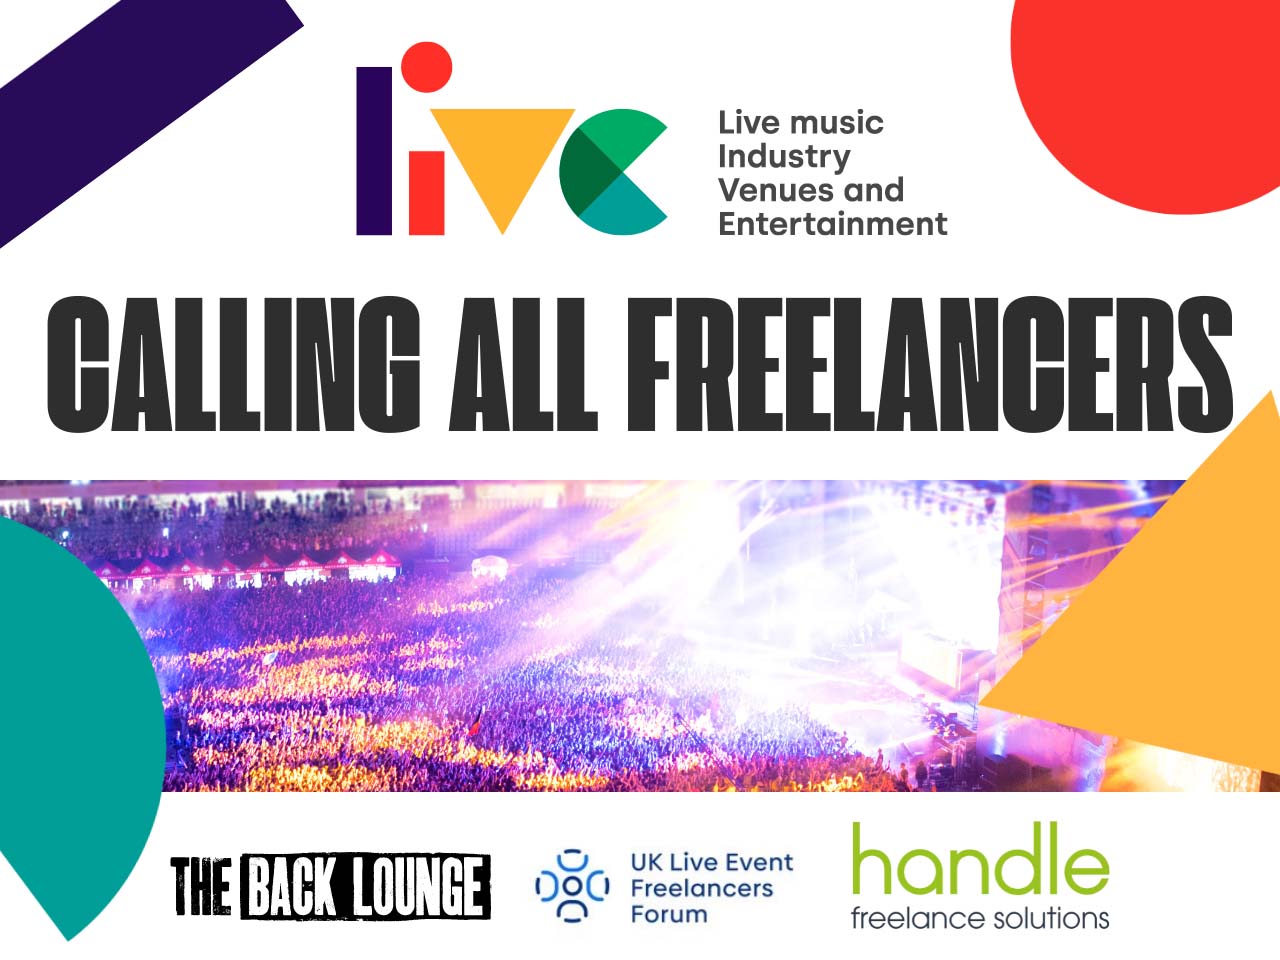 Handle Freelance Solutions | LIVE music survey